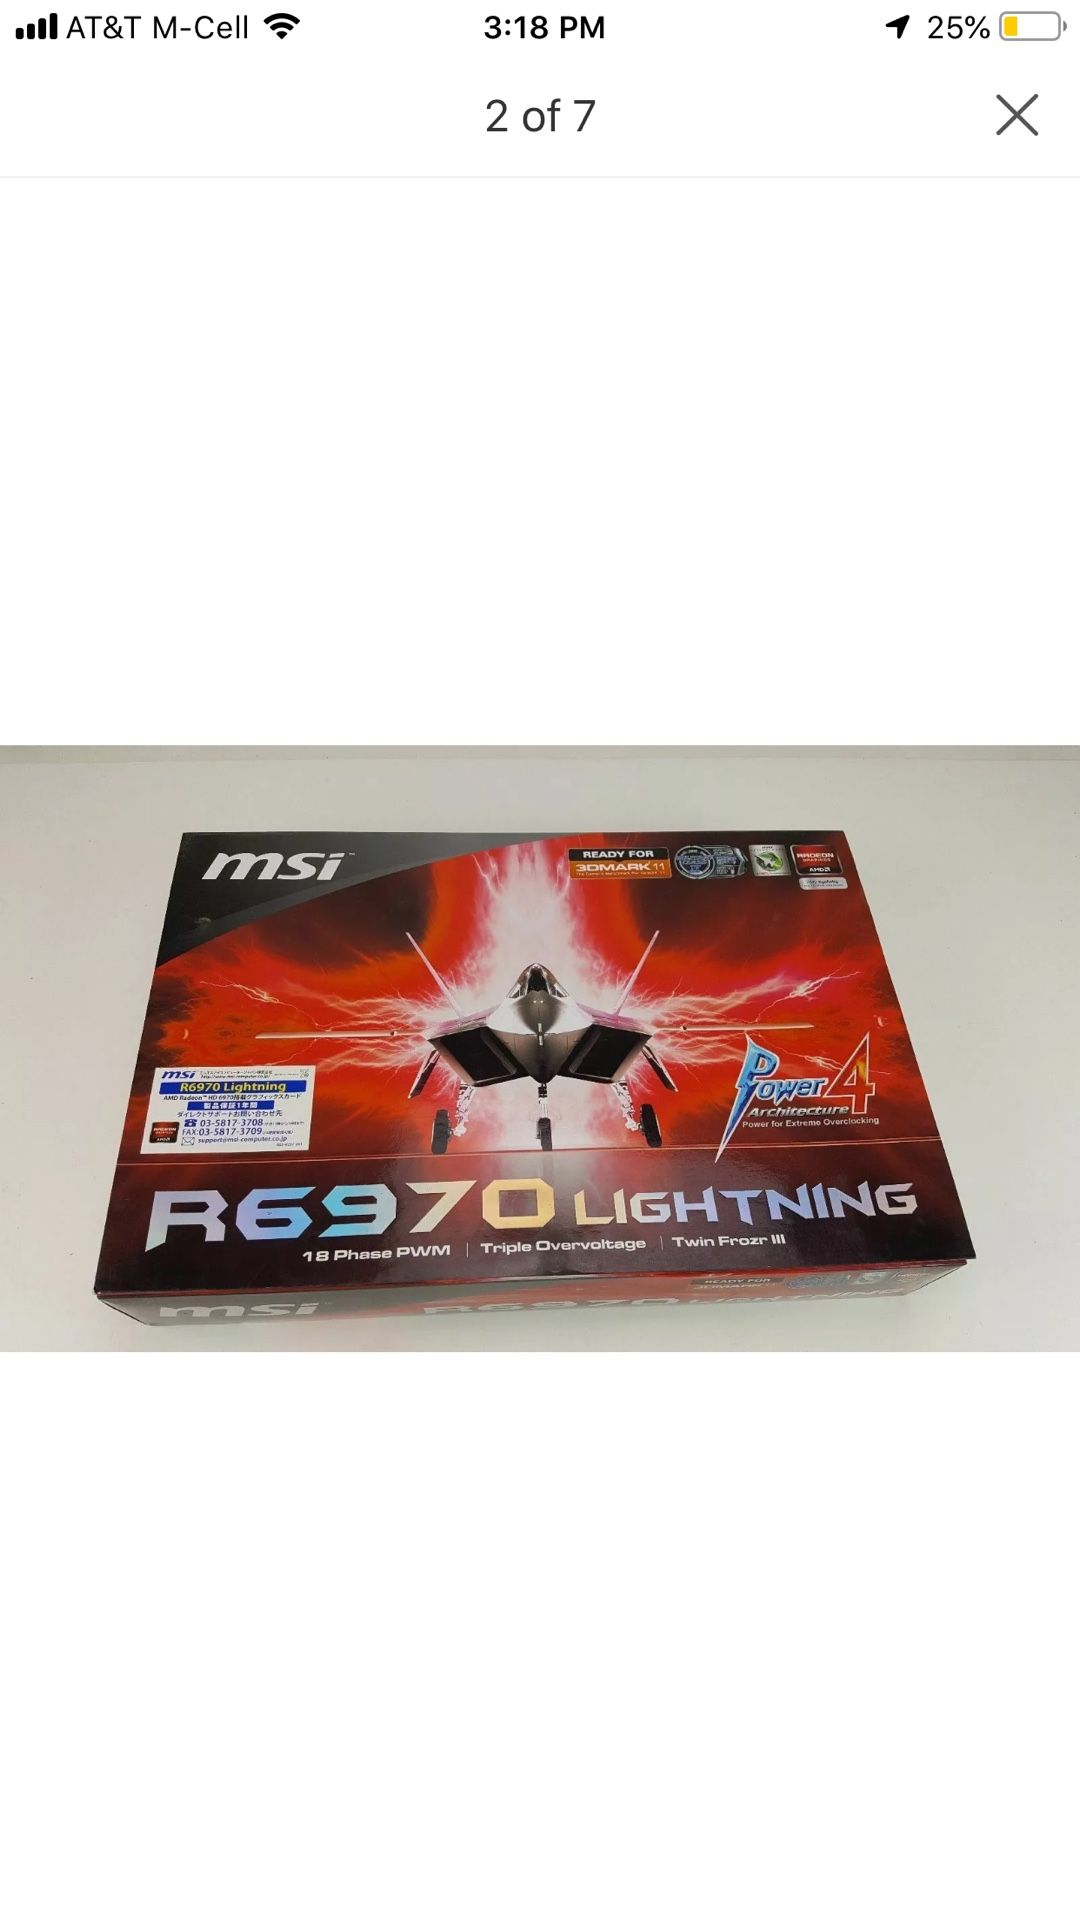 MSI AMD Radeon HD 6970 (R6970 LIGHTNING) 2GB